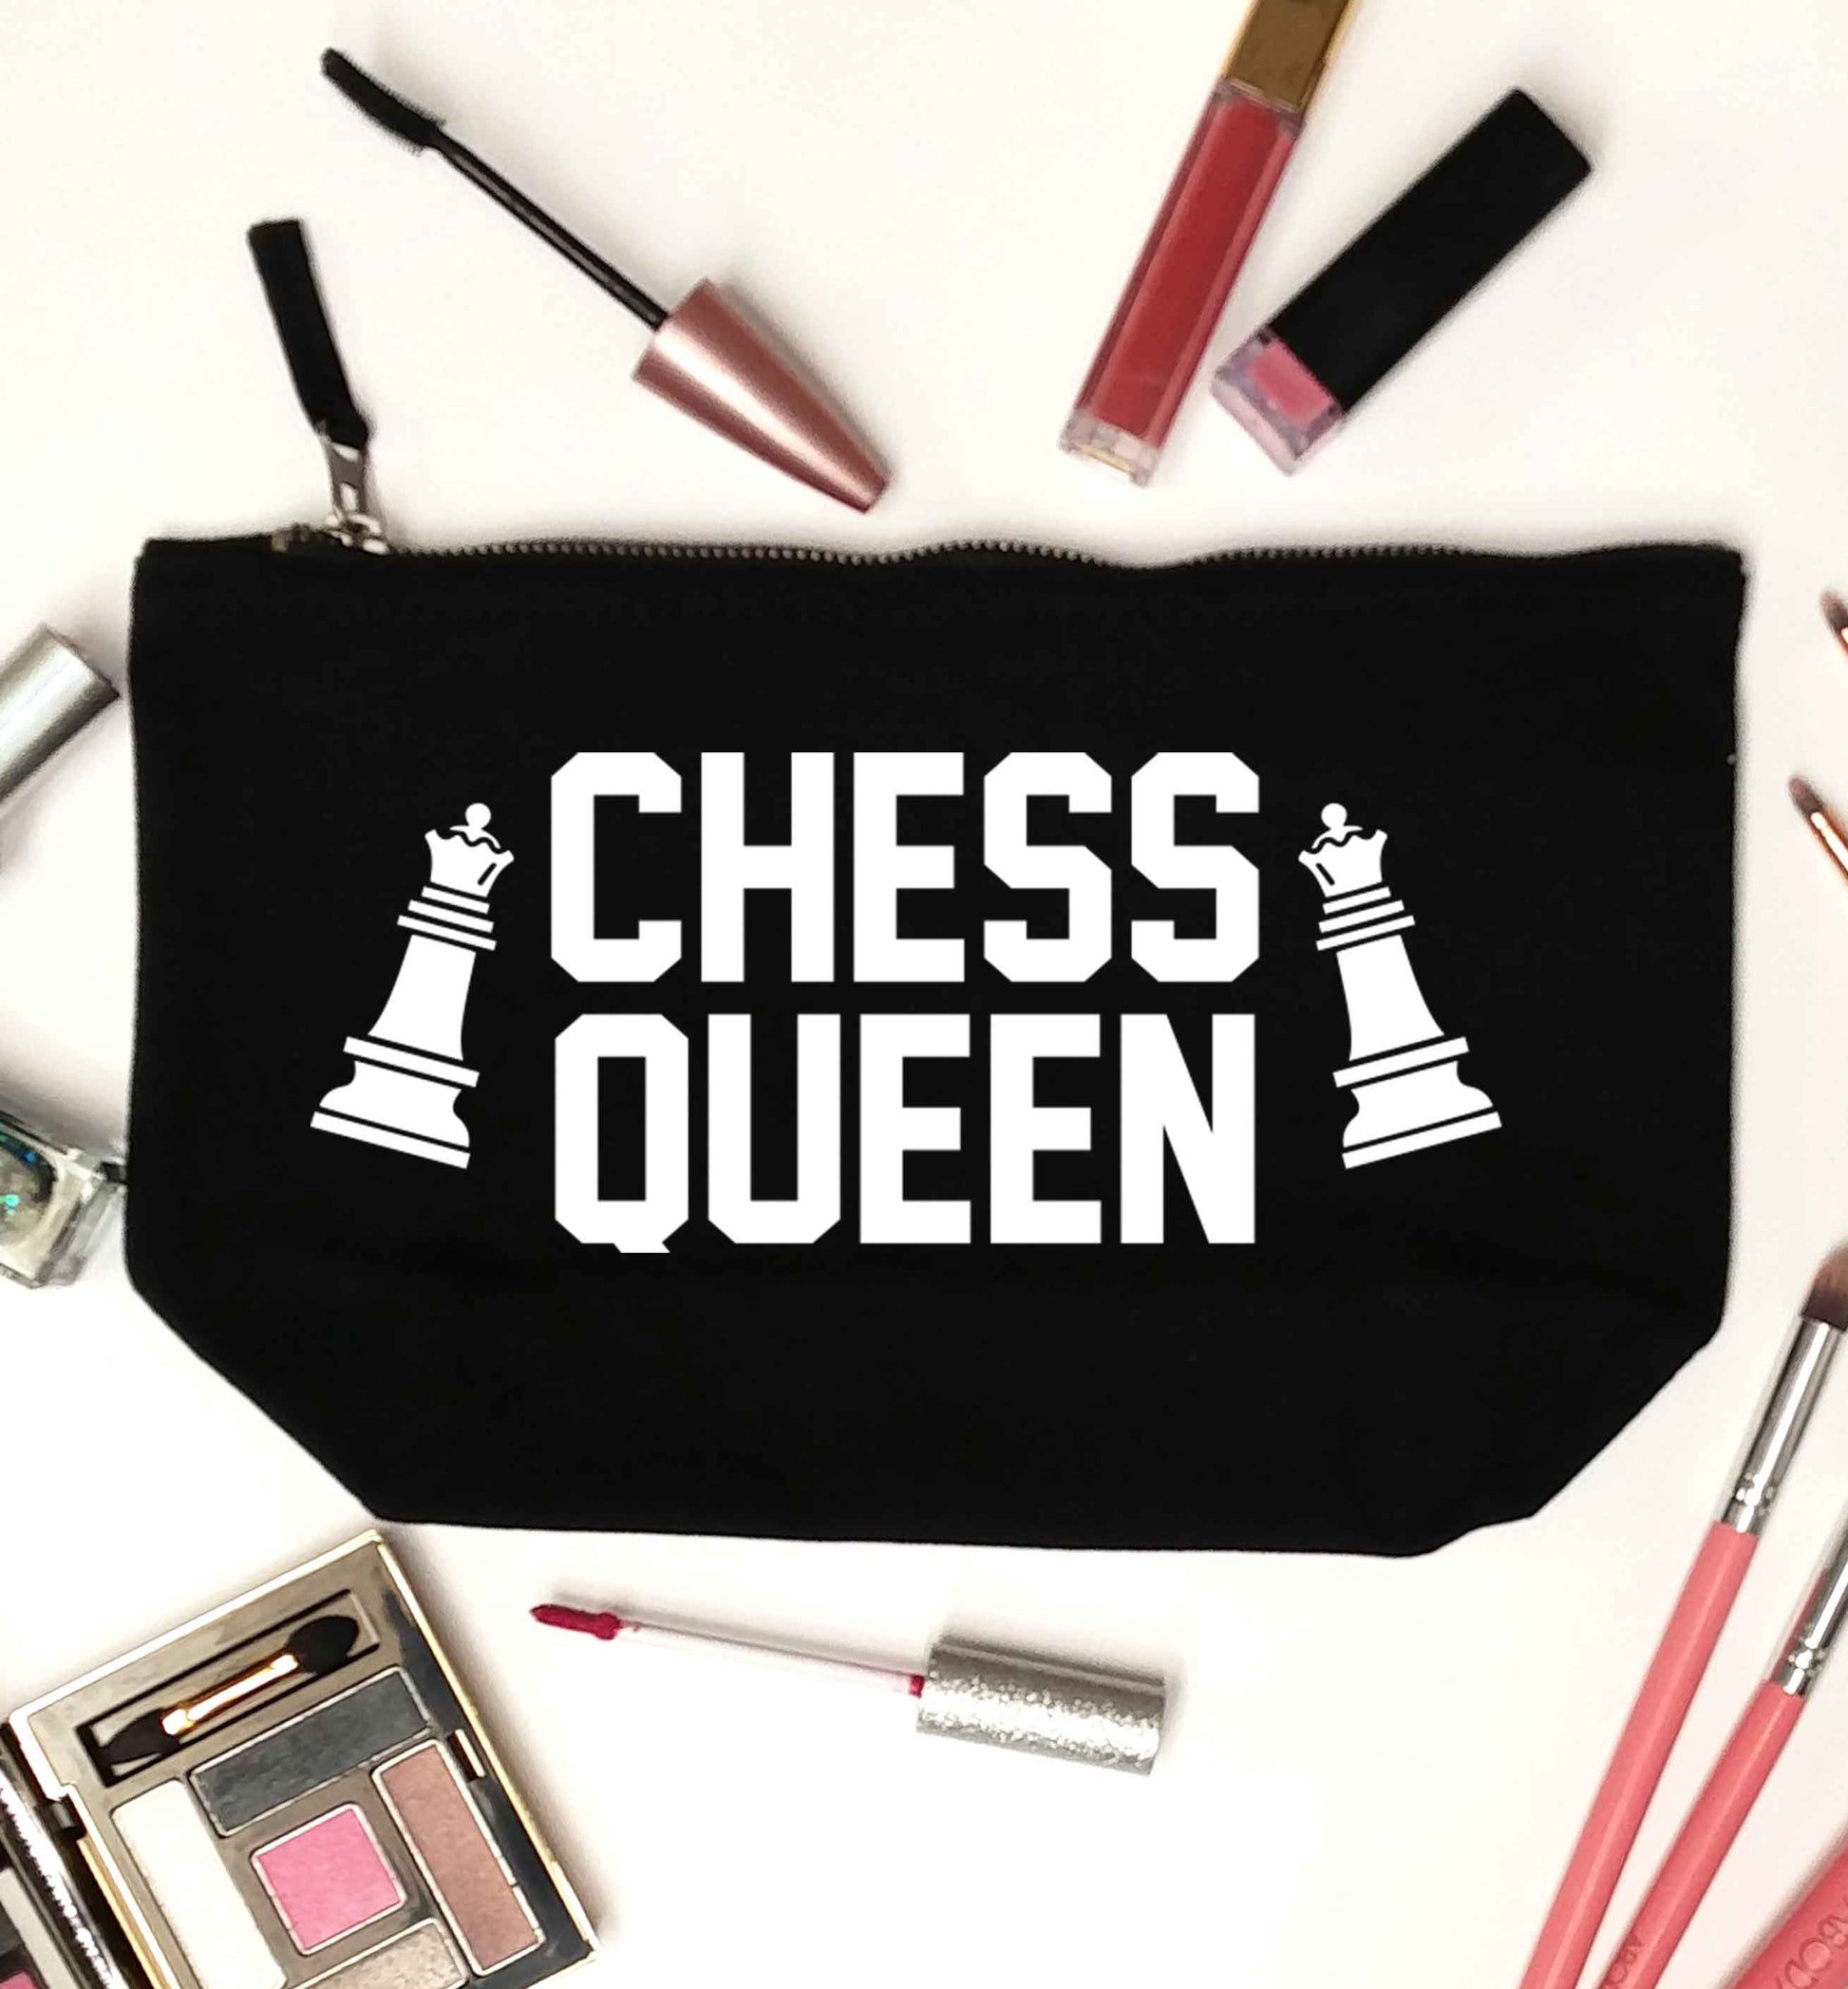 Chess queen black makeup bag